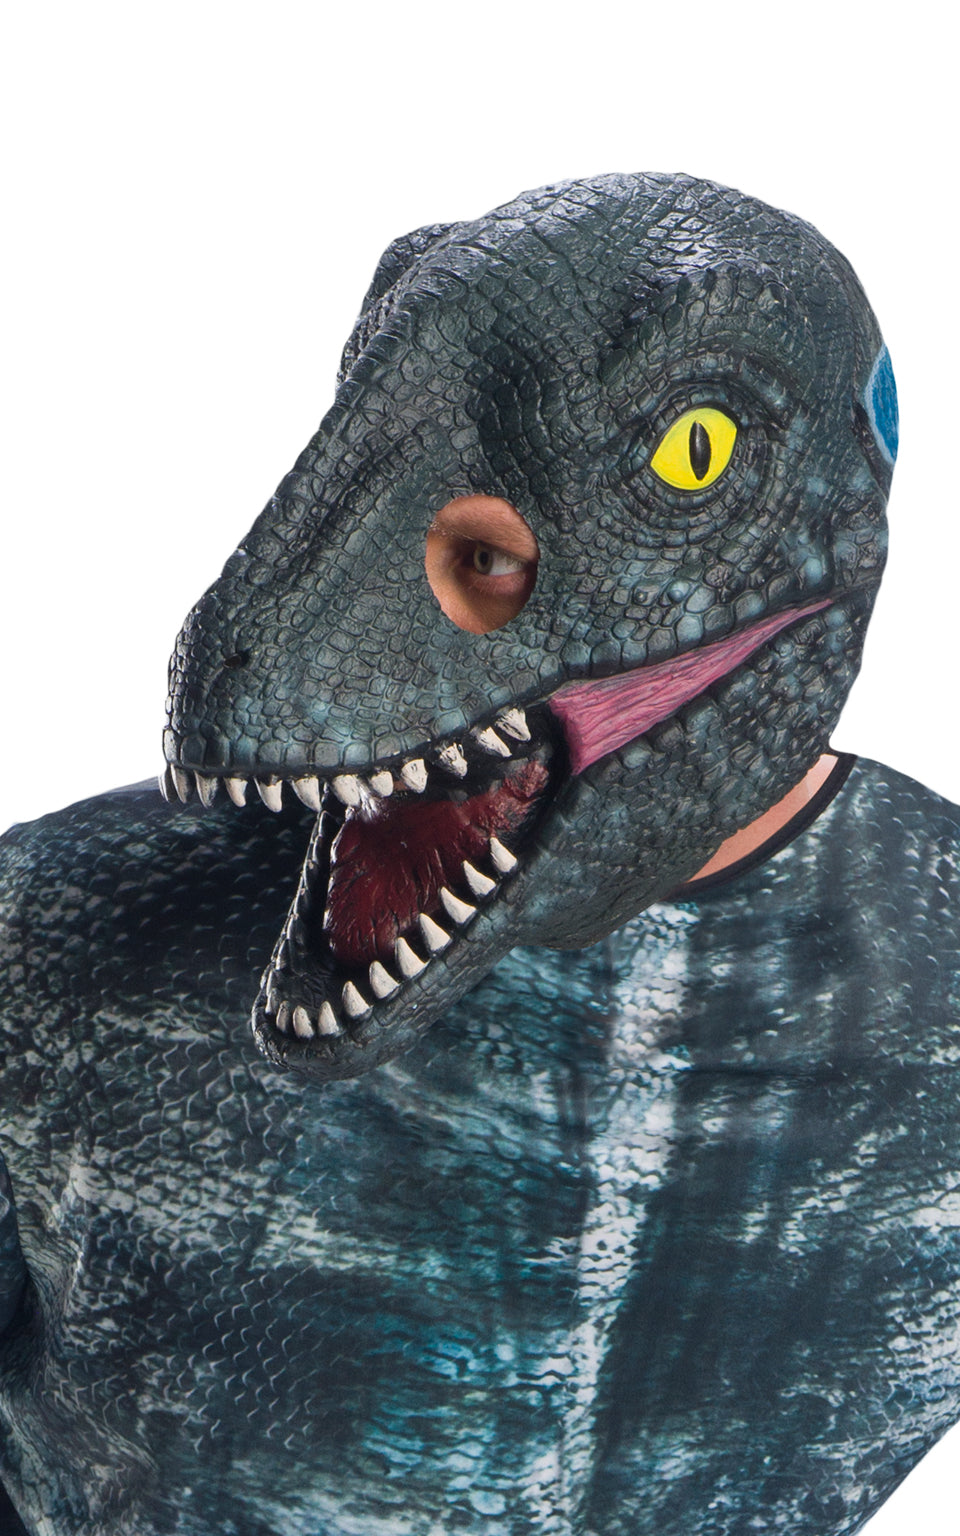 Jurassic World Velociraptor "Blue" Costume